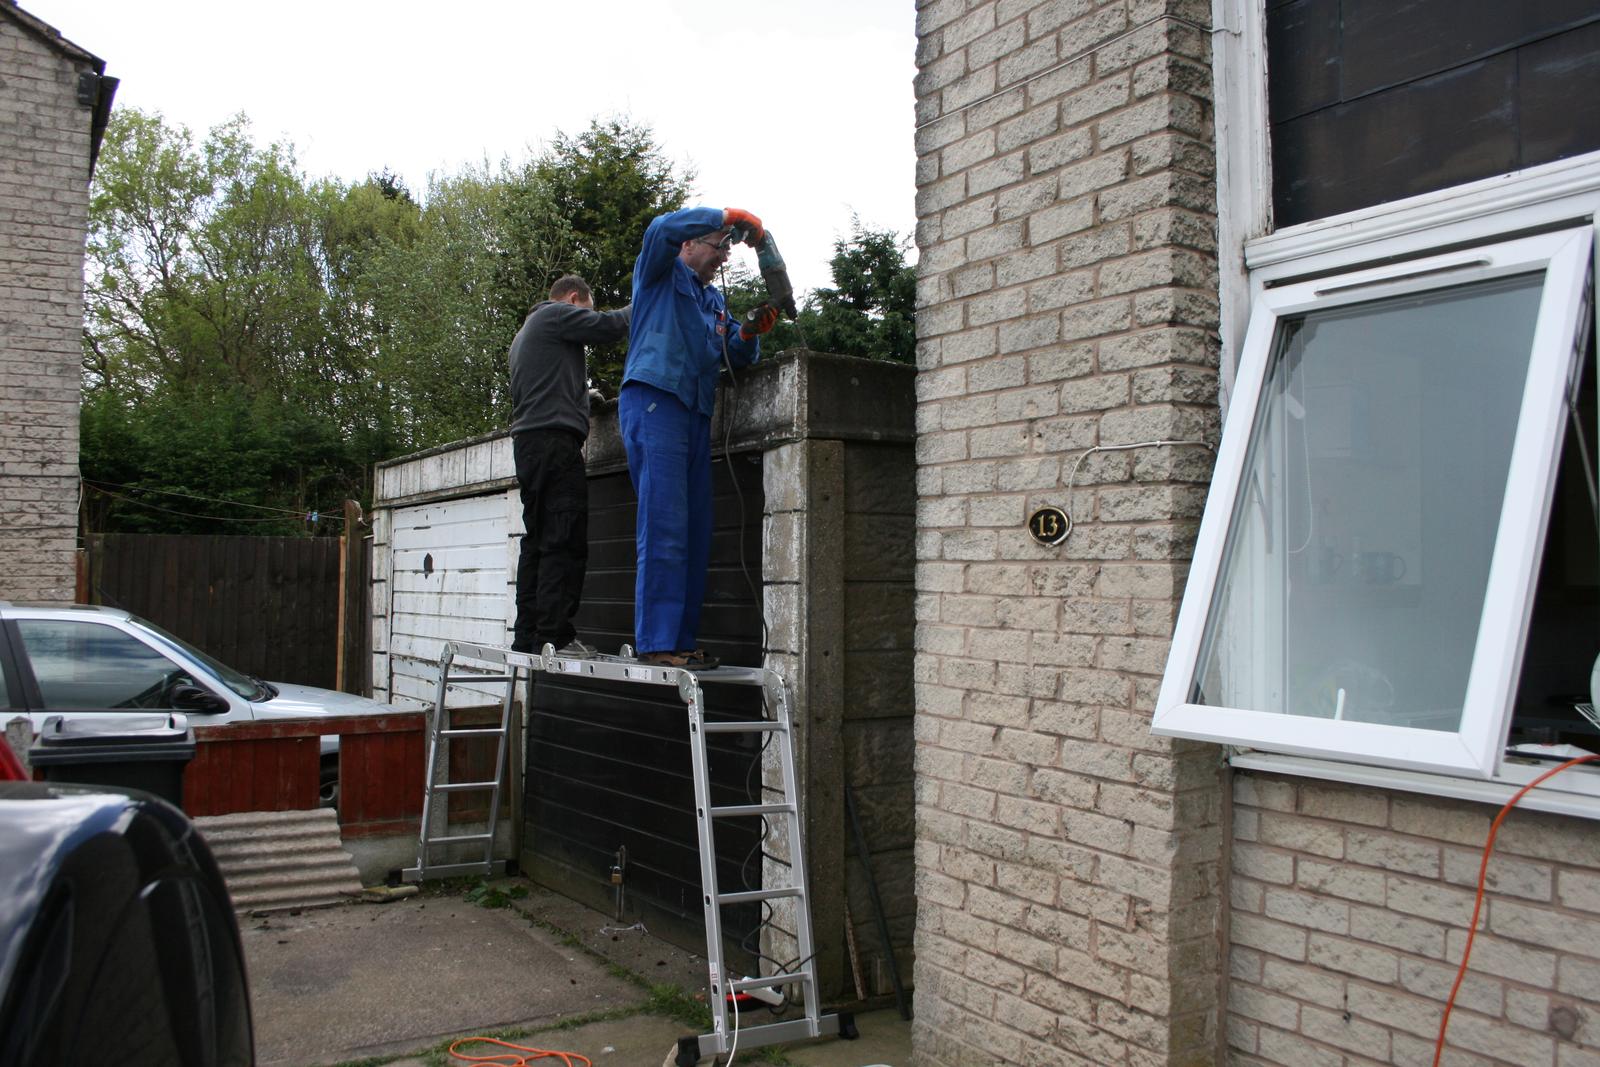 Prestavba domu a zahrady - 14 duben 2014 Brigada kapitalisticke prace dorazila! Oprava strechy sbijeckou.